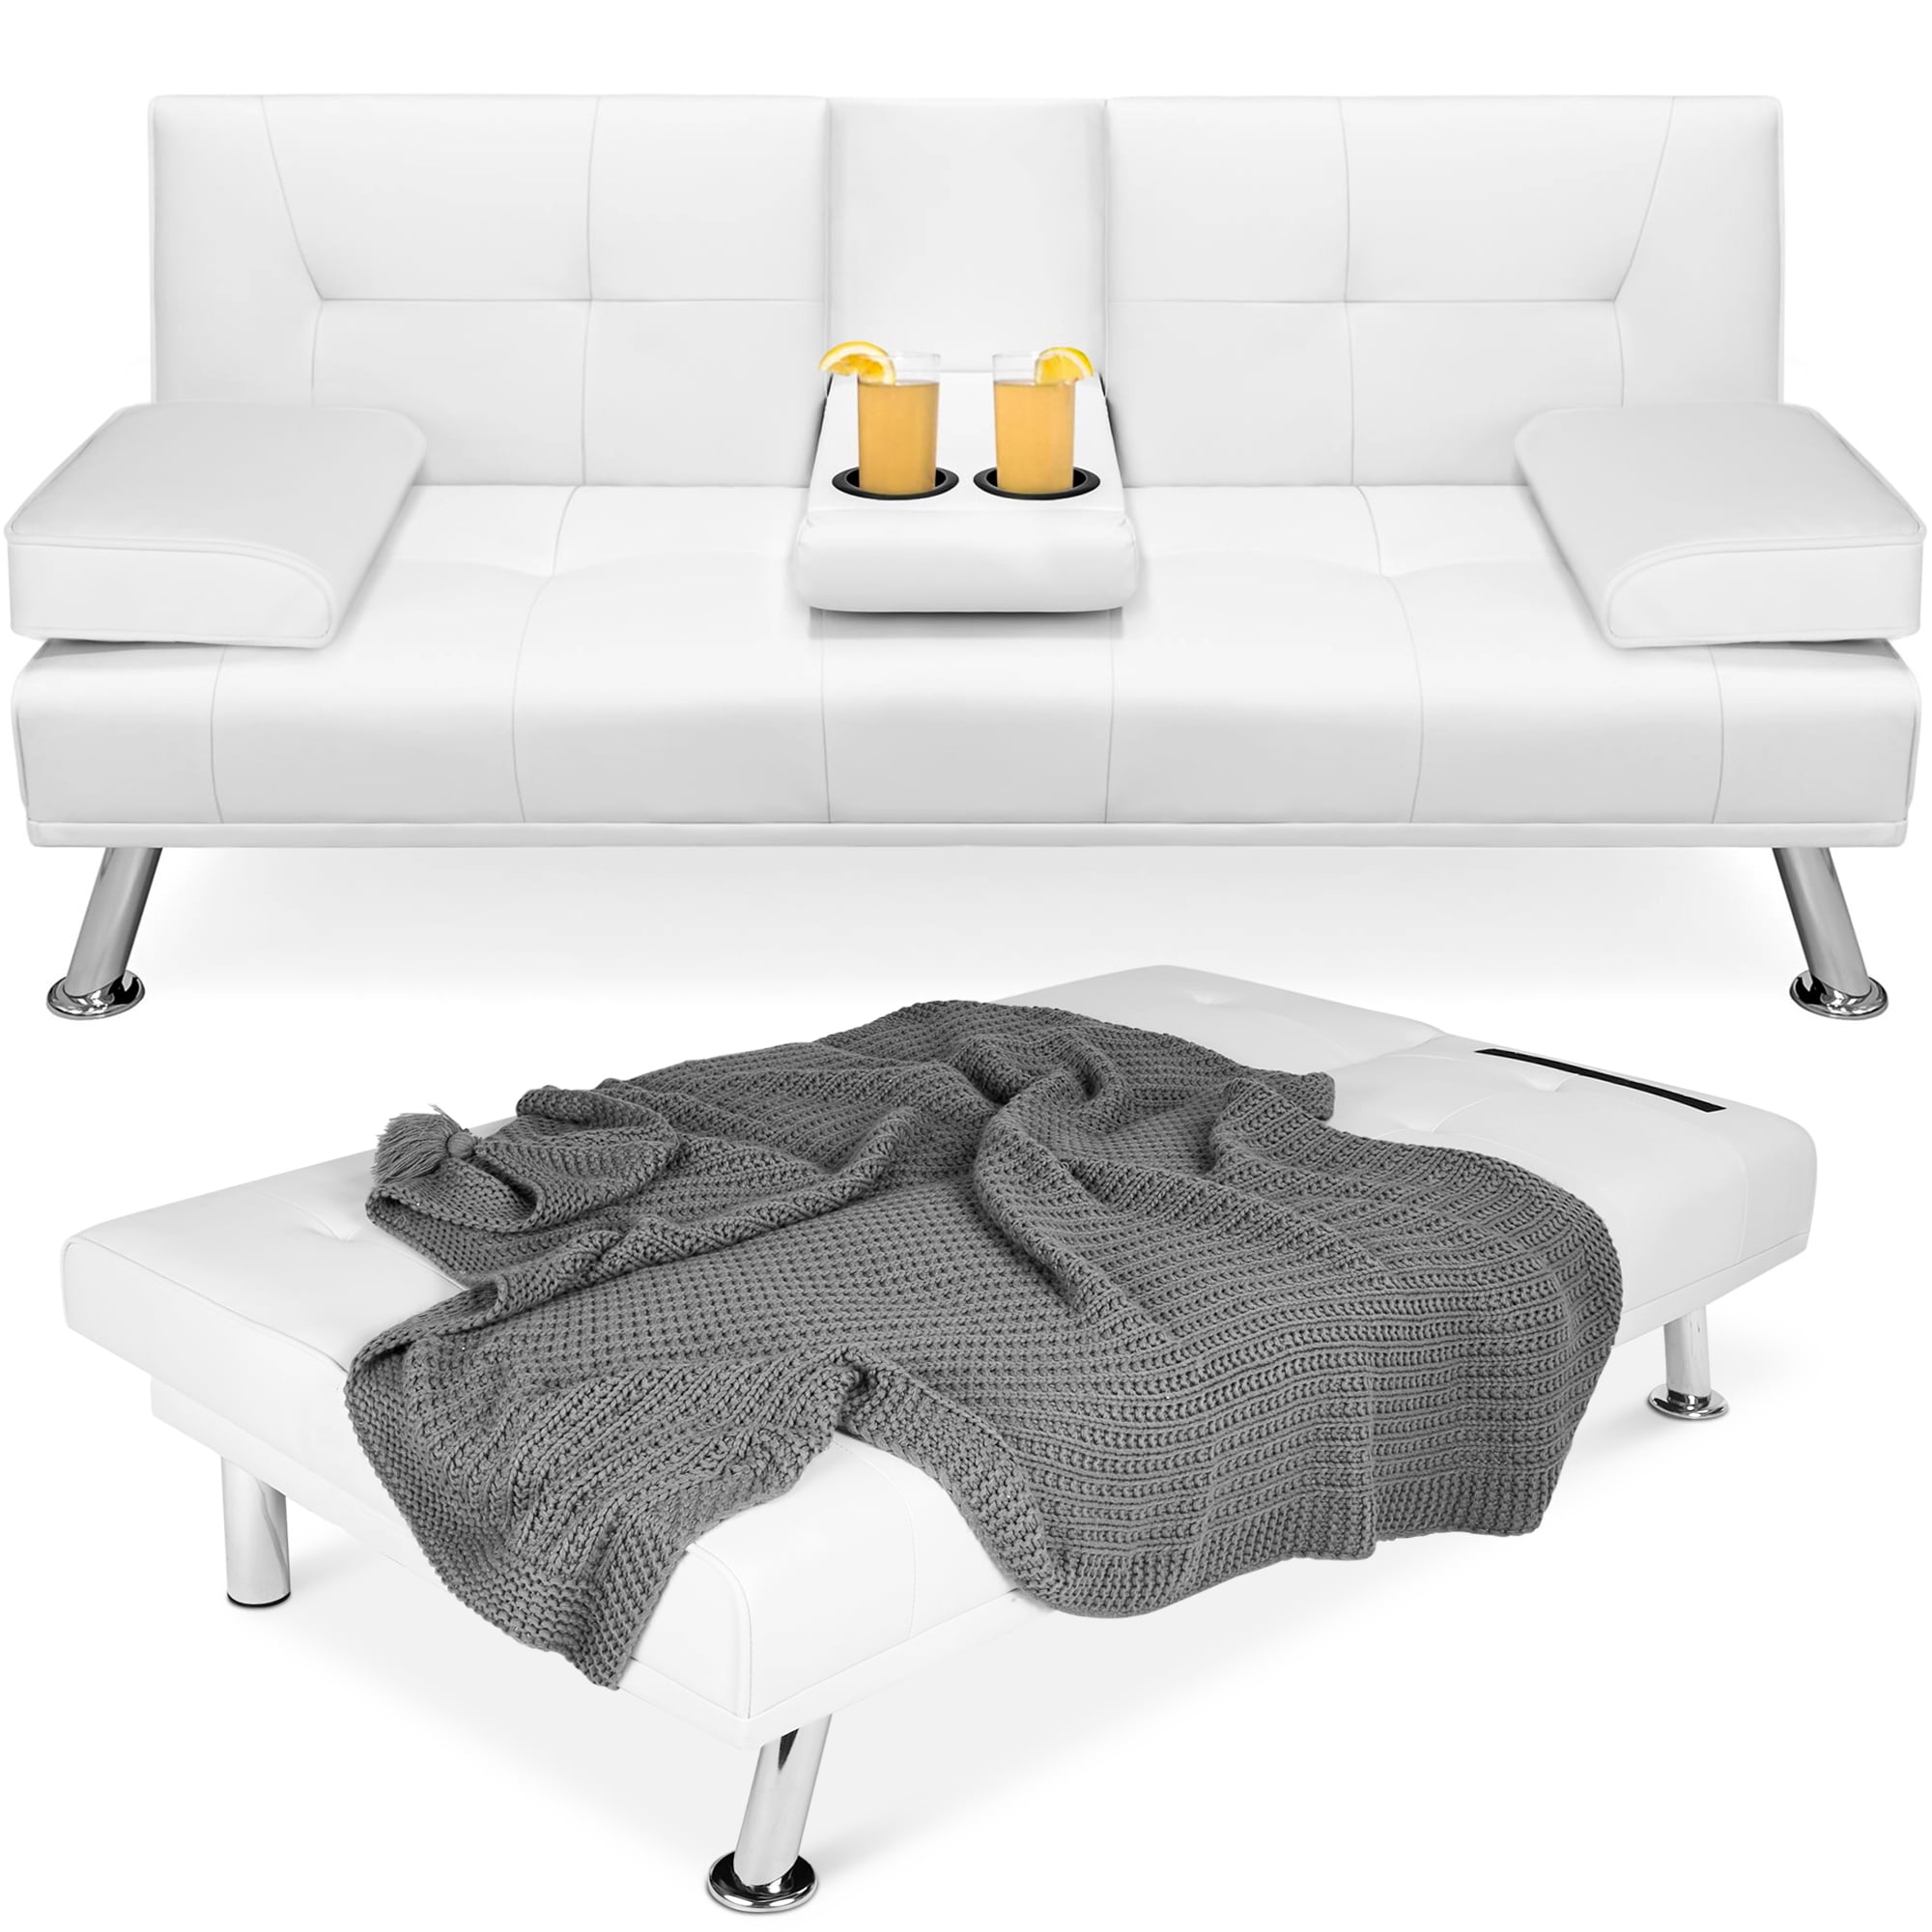 Faux Leather Convertible Futon Sofa, Modern White Leather Sofa With Chrome Legs